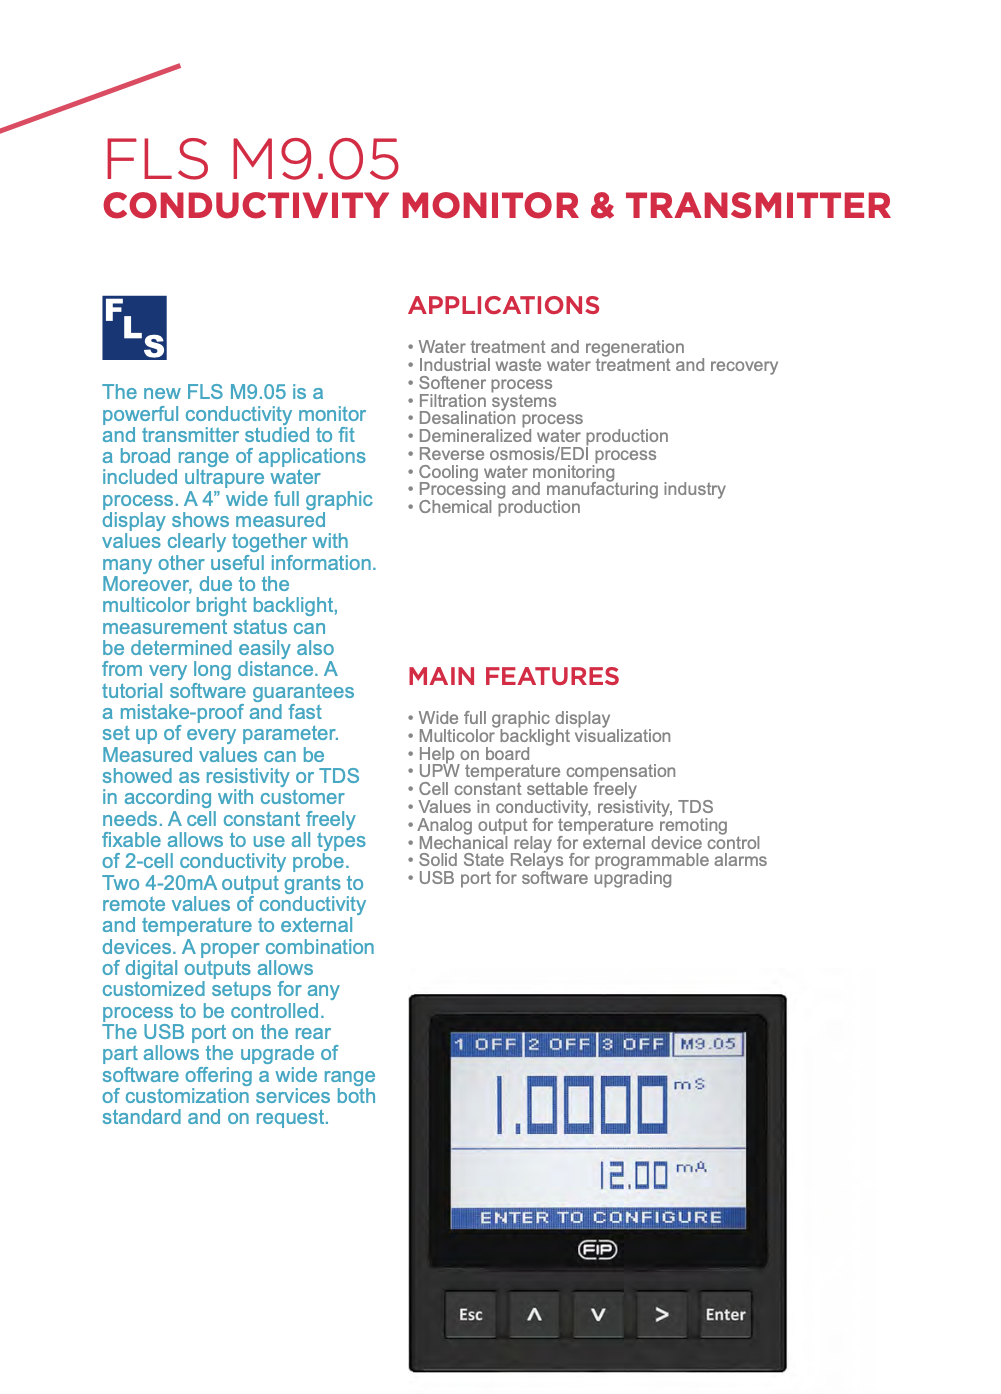 M9.05 Conductivity Monitor and Transmitter